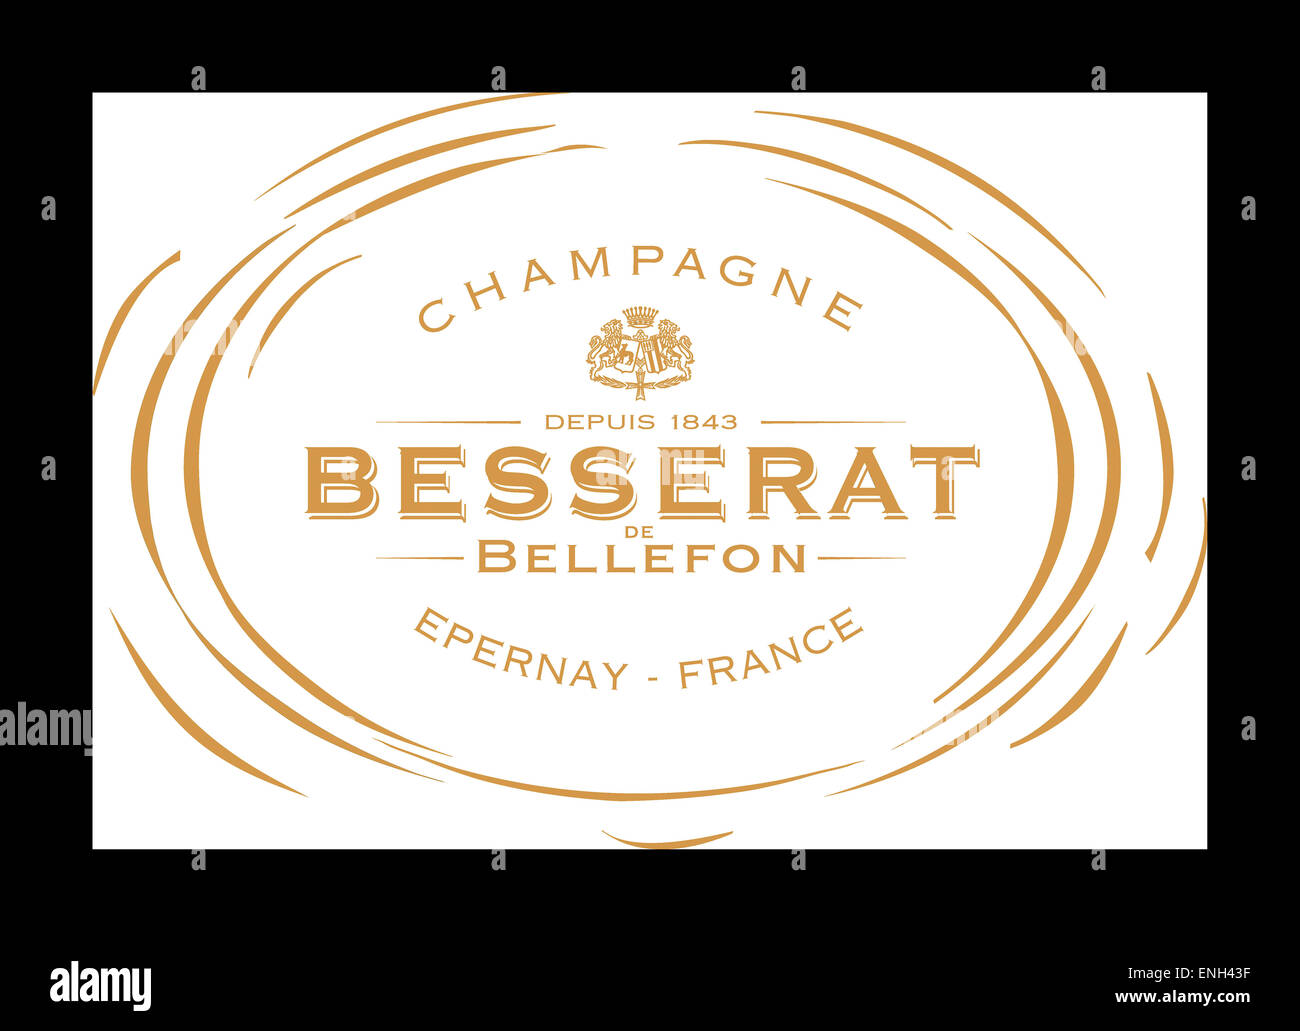 Etiqueta de botella de Champagne Besserat de Bellefon Foto de stock